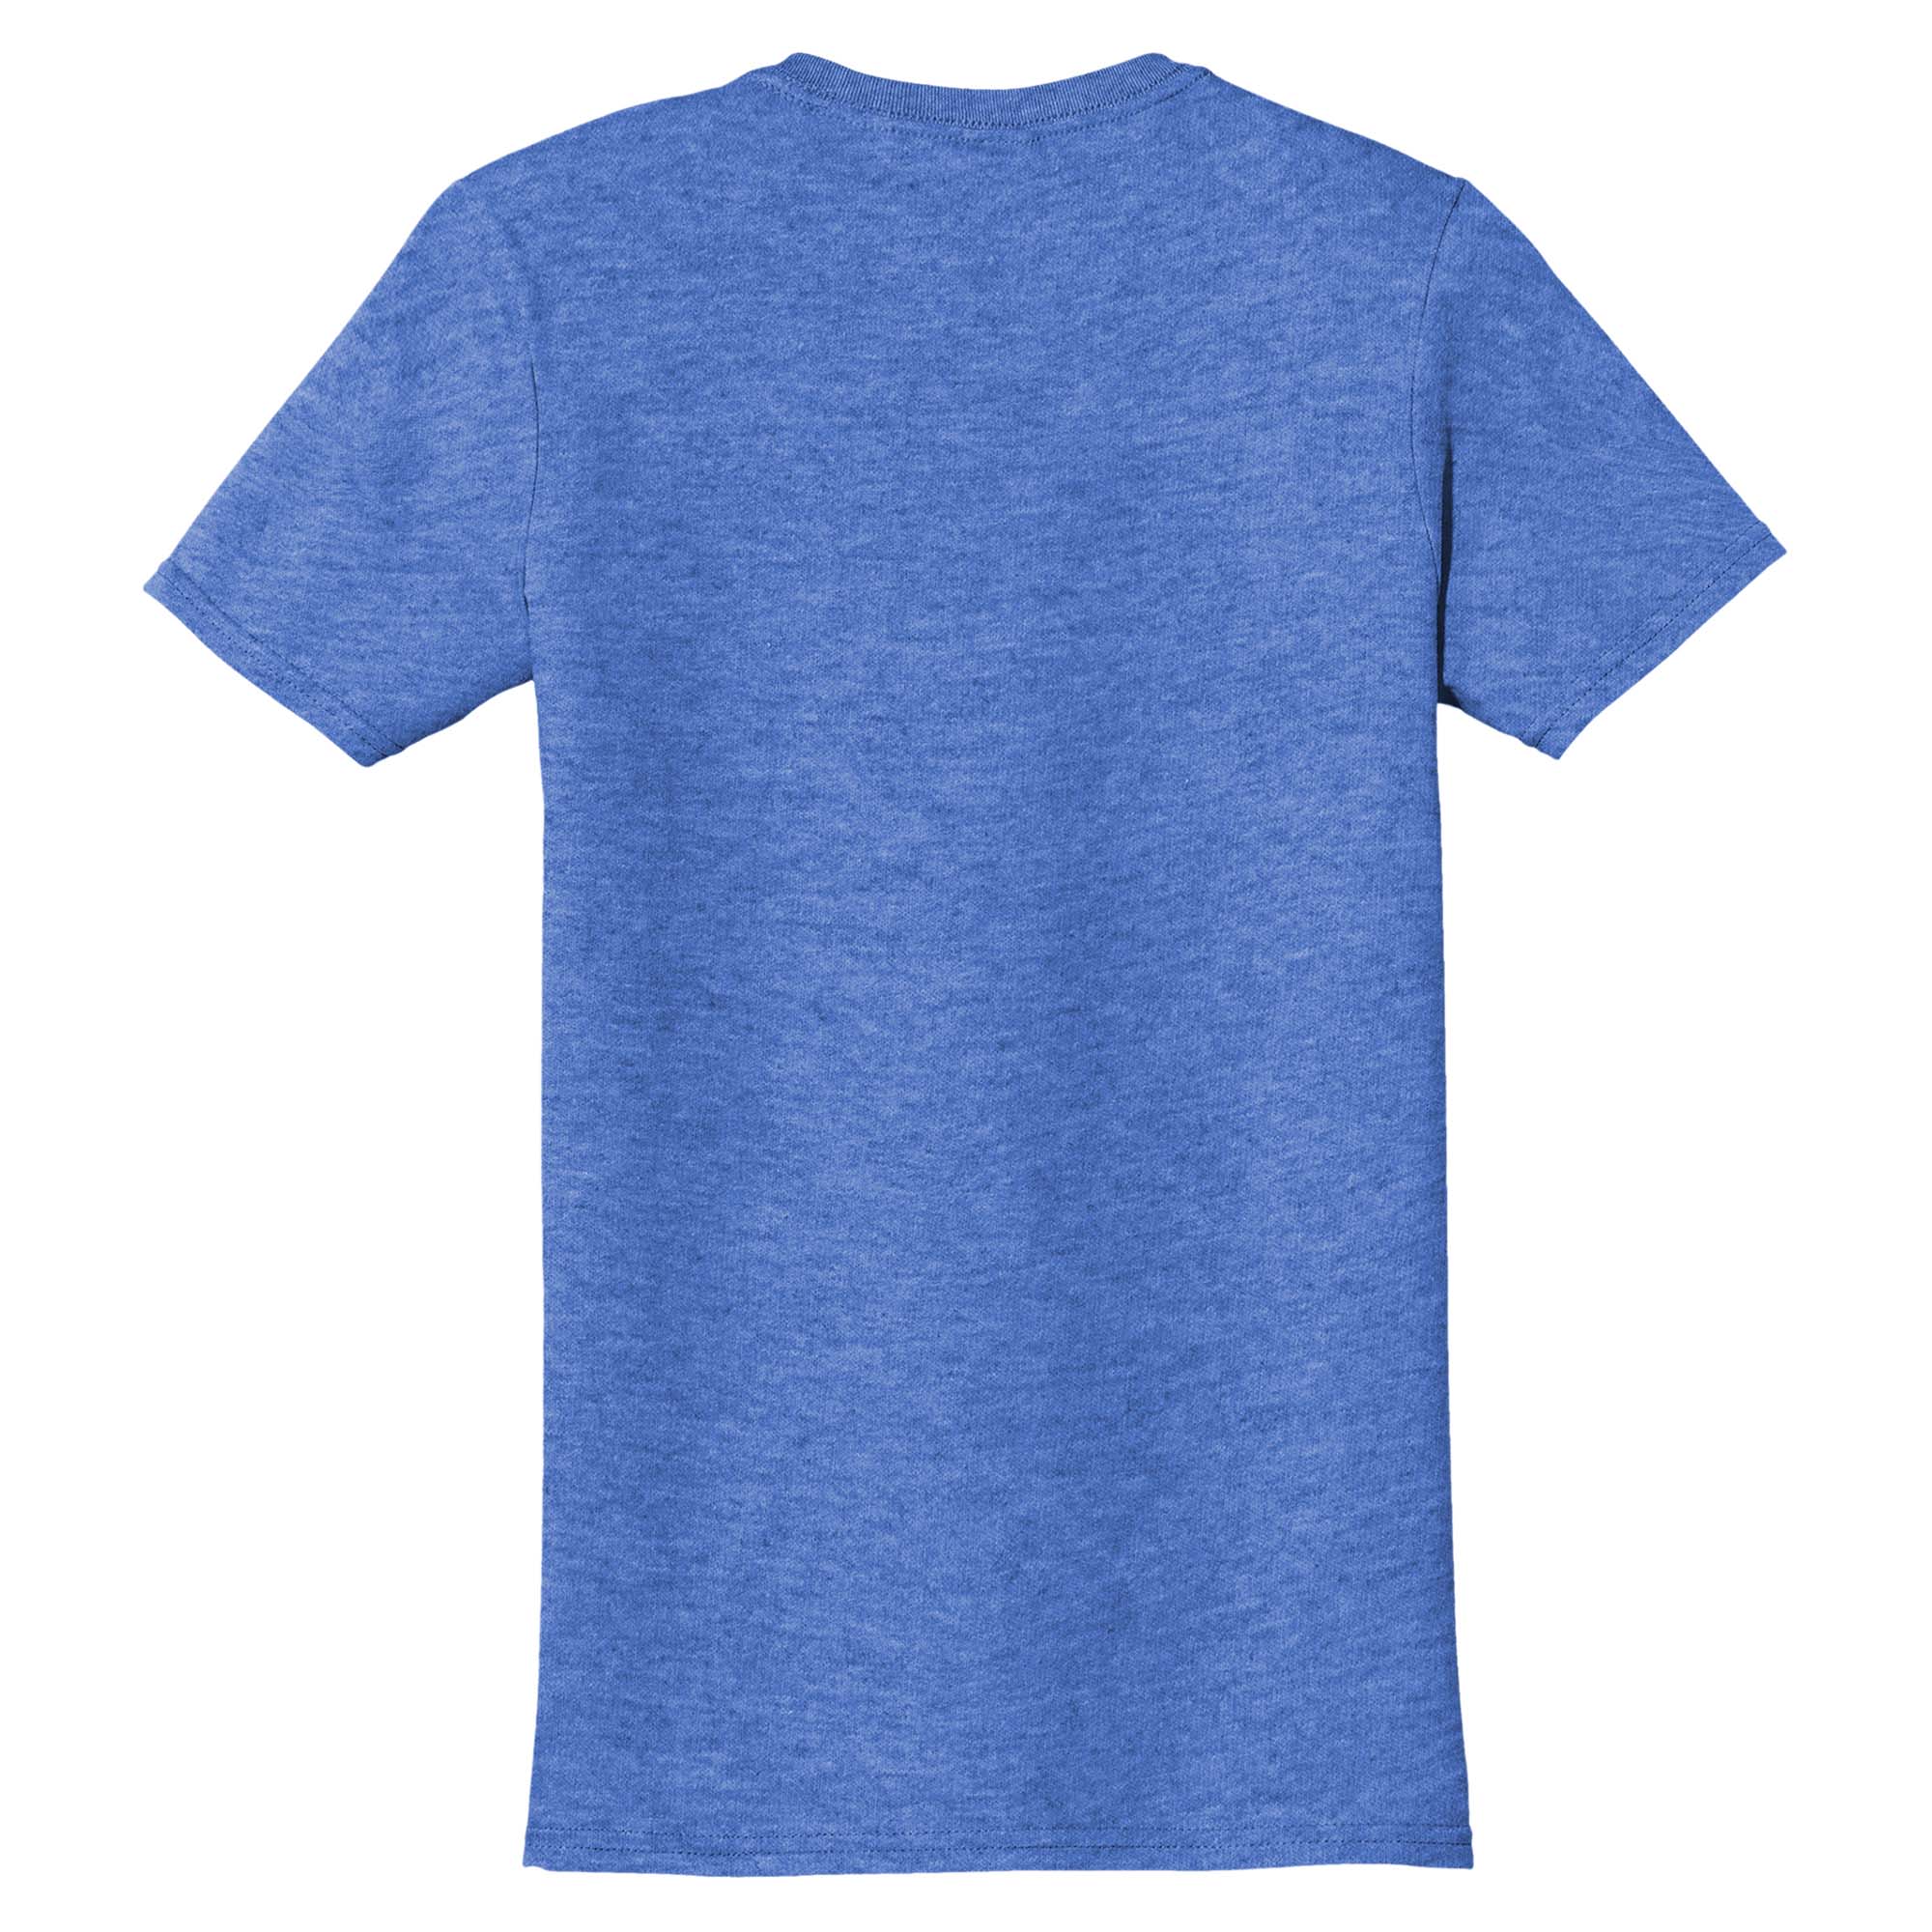 heather royal blue t shirt